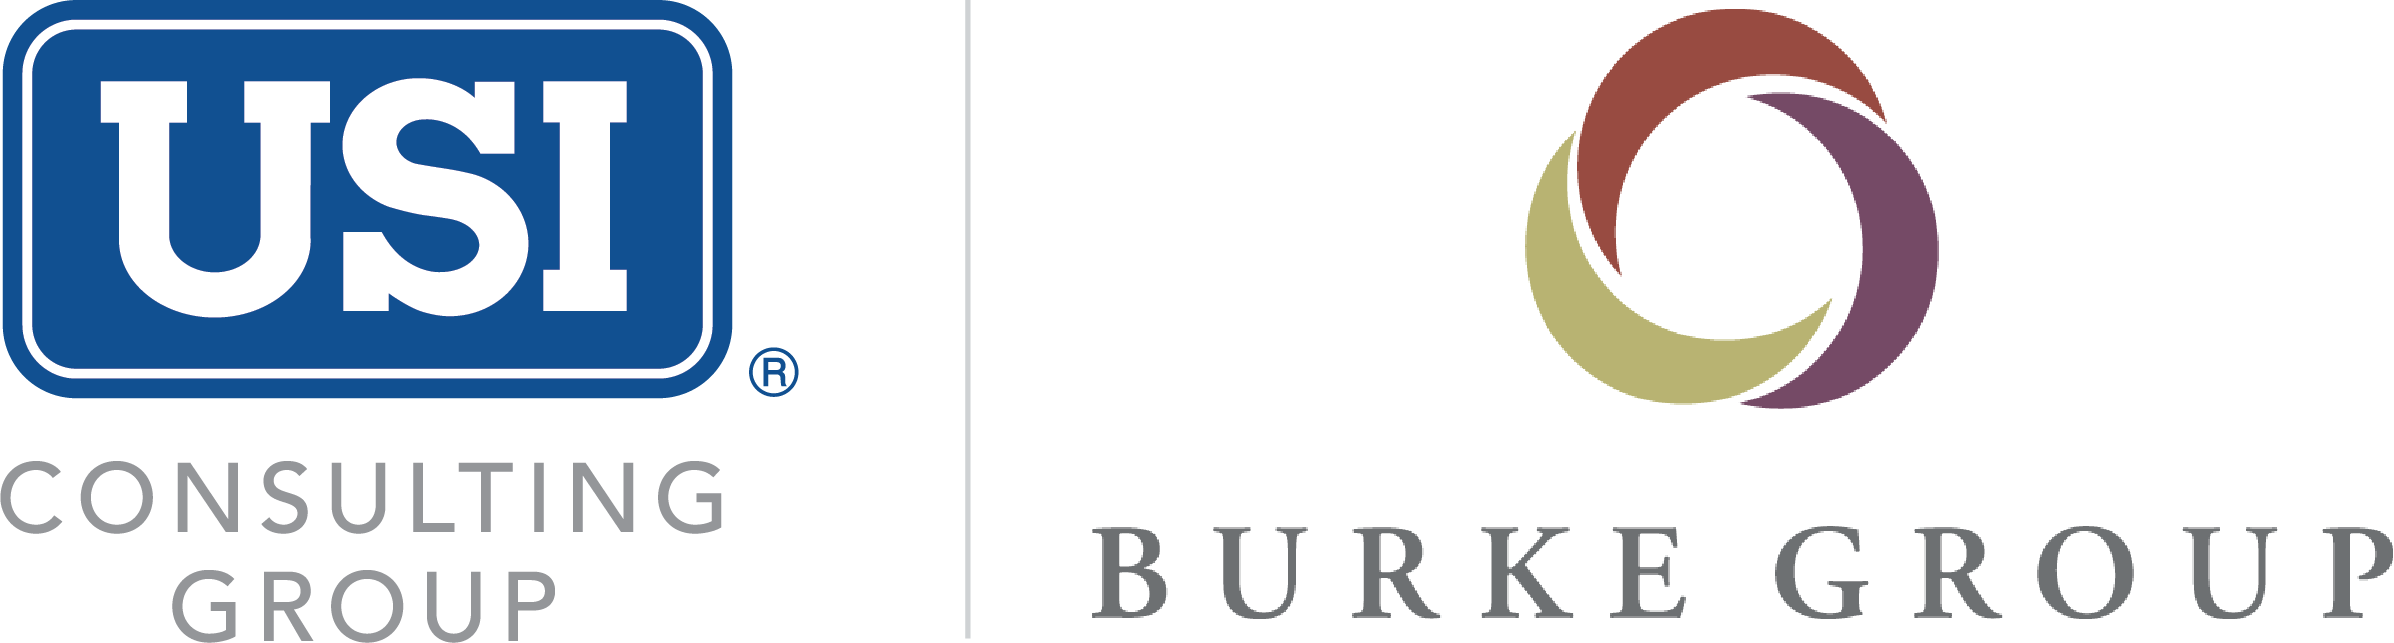 USICG-Burke cobranded logo_CMYK